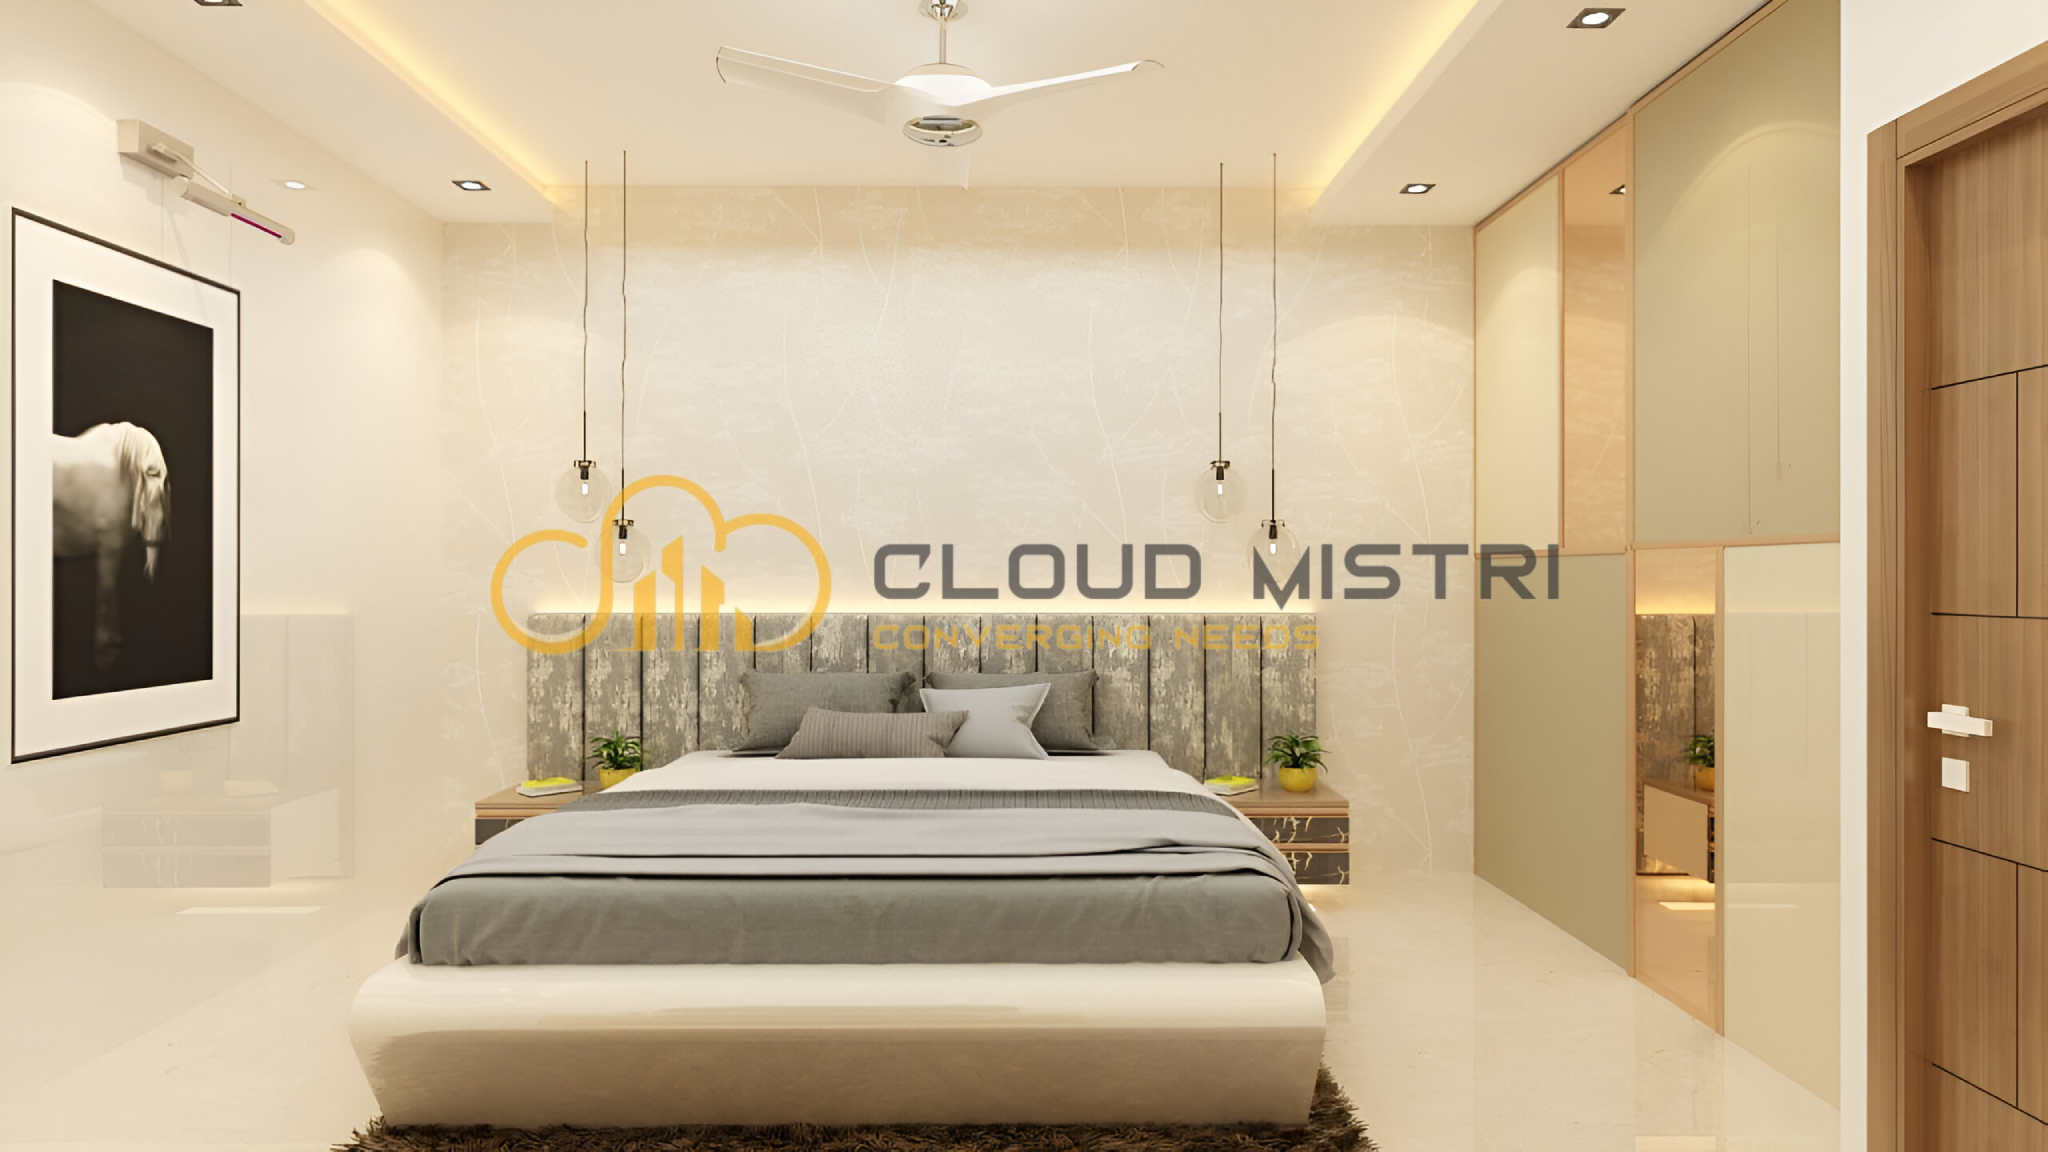 gallery cloudmistri interior design2